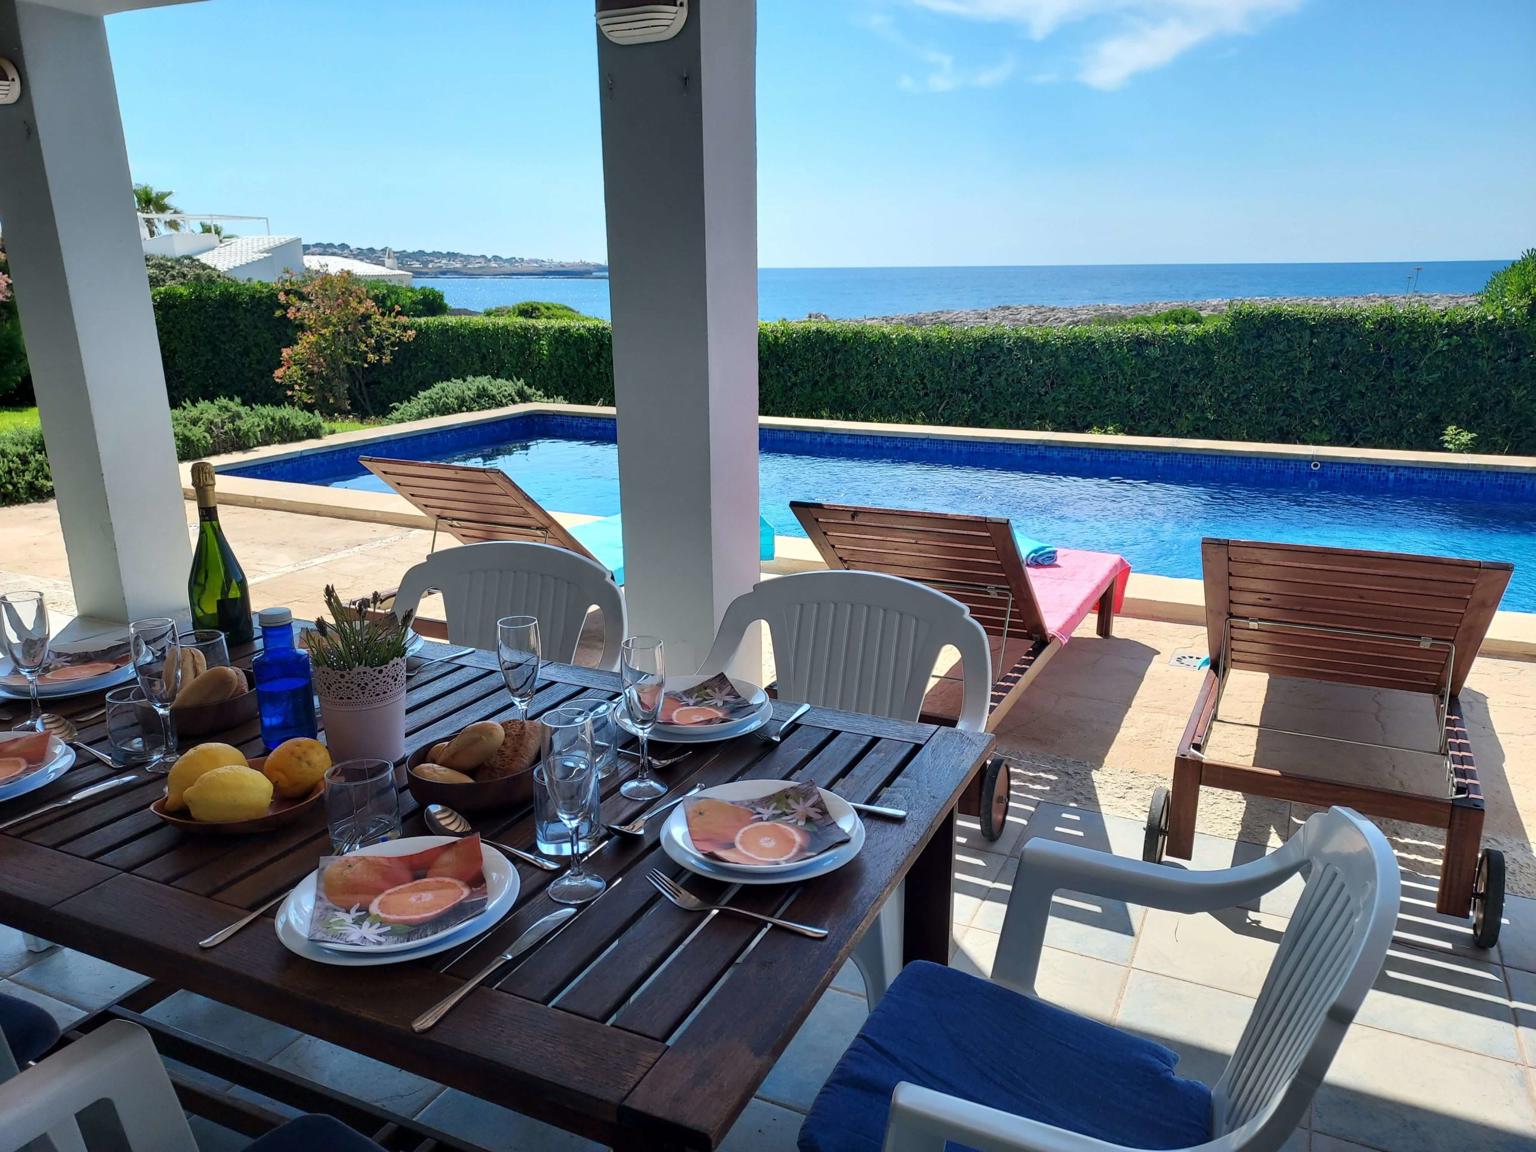 Villa Blau Mari - outside porch area with views to the pool and the sea - Villa with pool - Cap den Font - Sant Lluis - Menorca